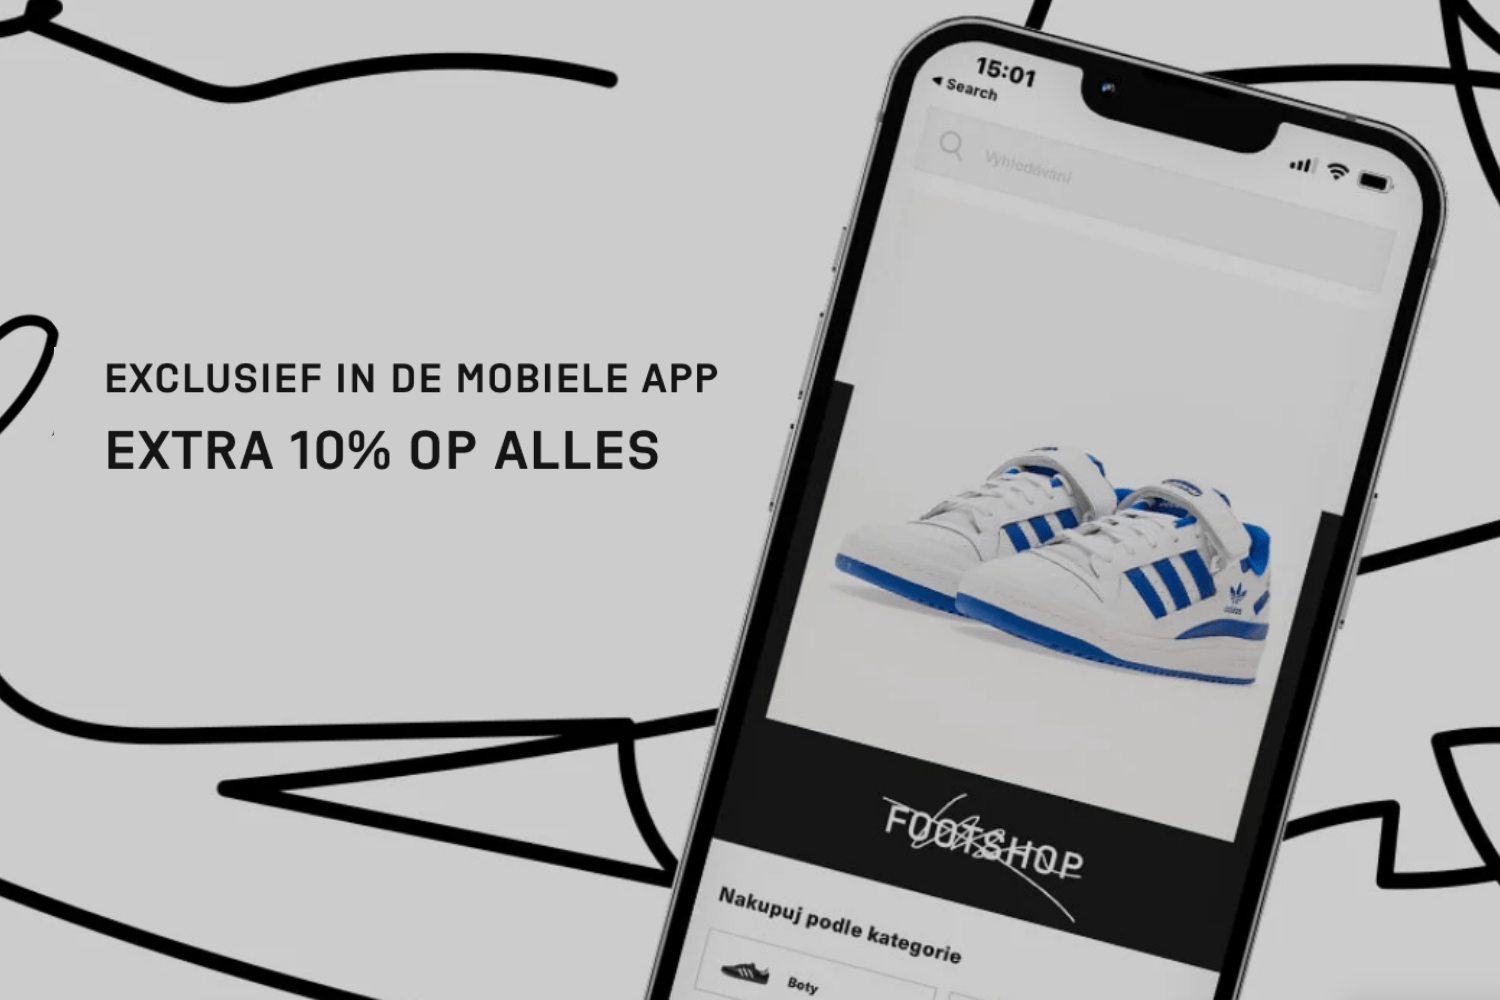 Exclusieve sale in de Footshop app: 10% korting op sneakers en meer